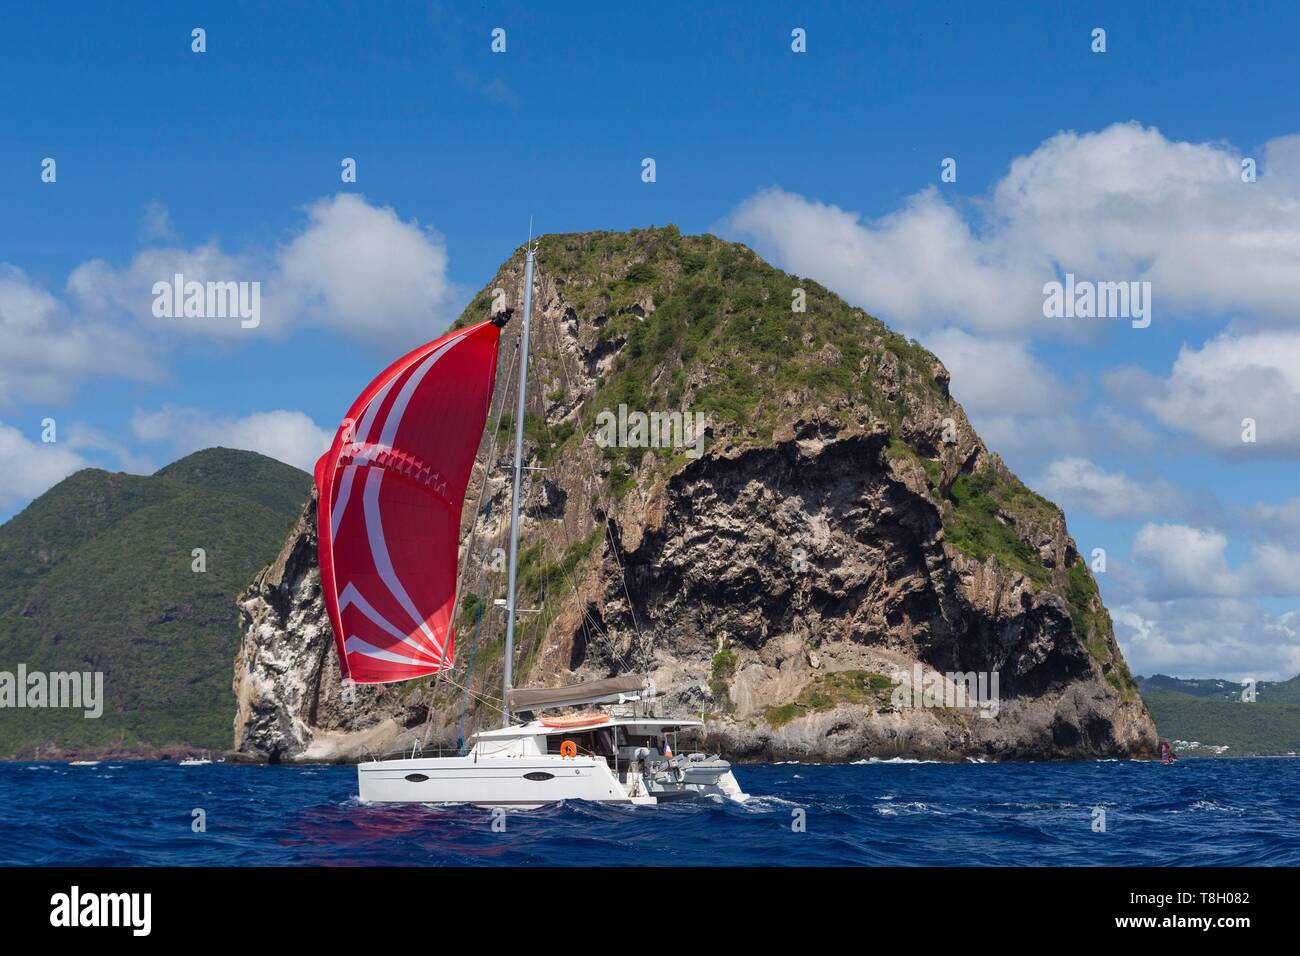 Martinique, Caribbean Sea diamond tip, desert island, diamond rock, foreground cruising catamaran sailing under red spinnaker Stock Photo